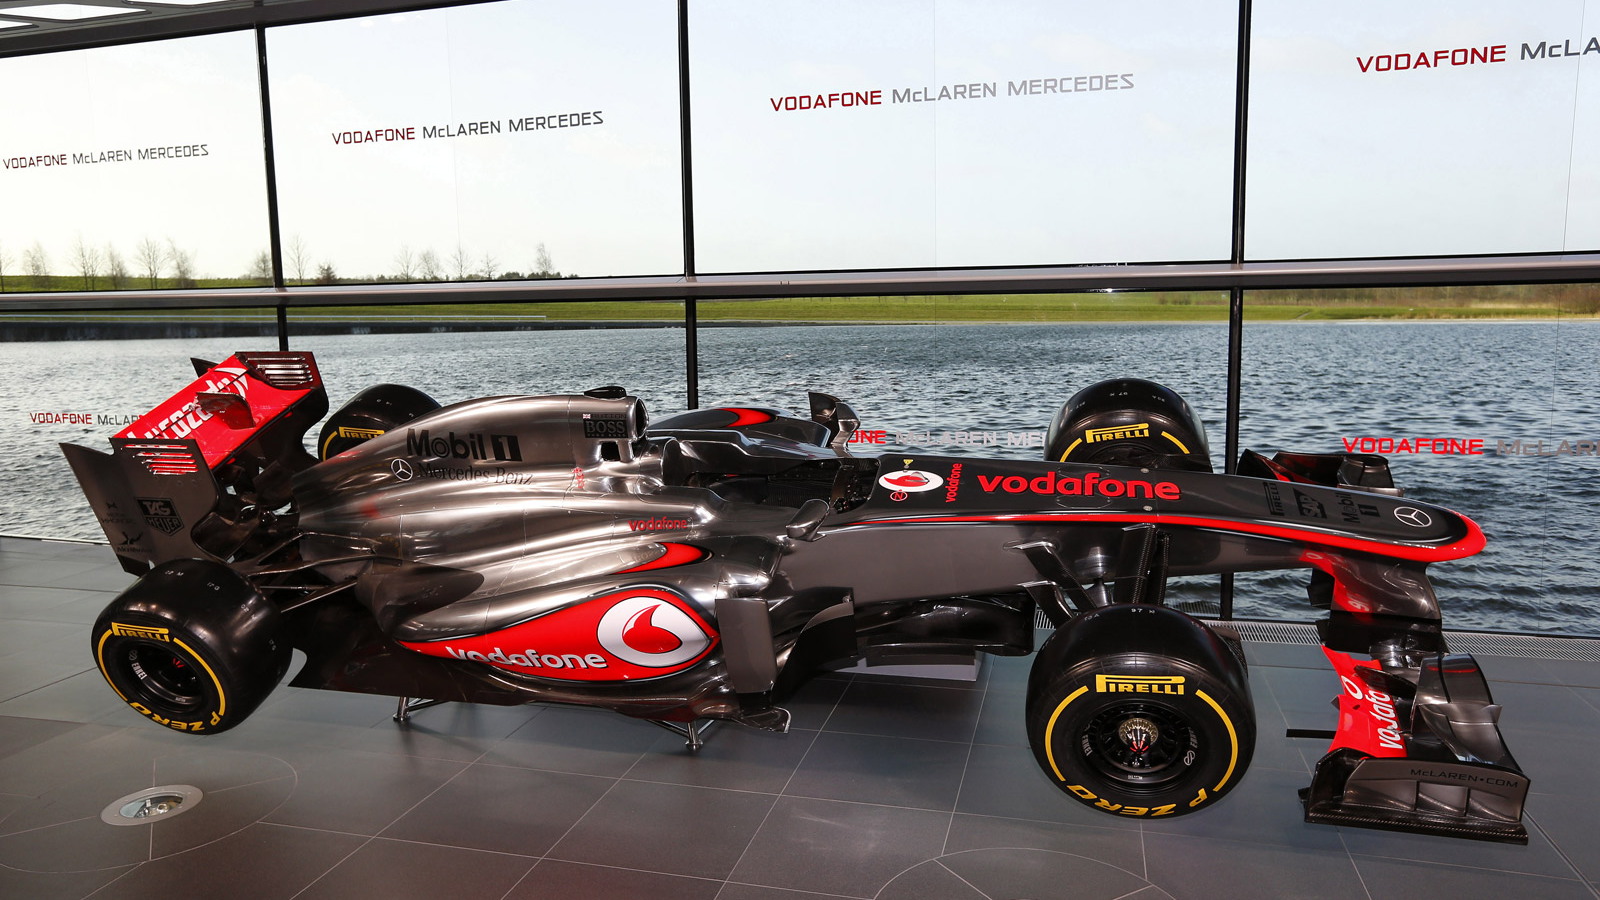 McLaren MP4-28 2013 Formula One race car